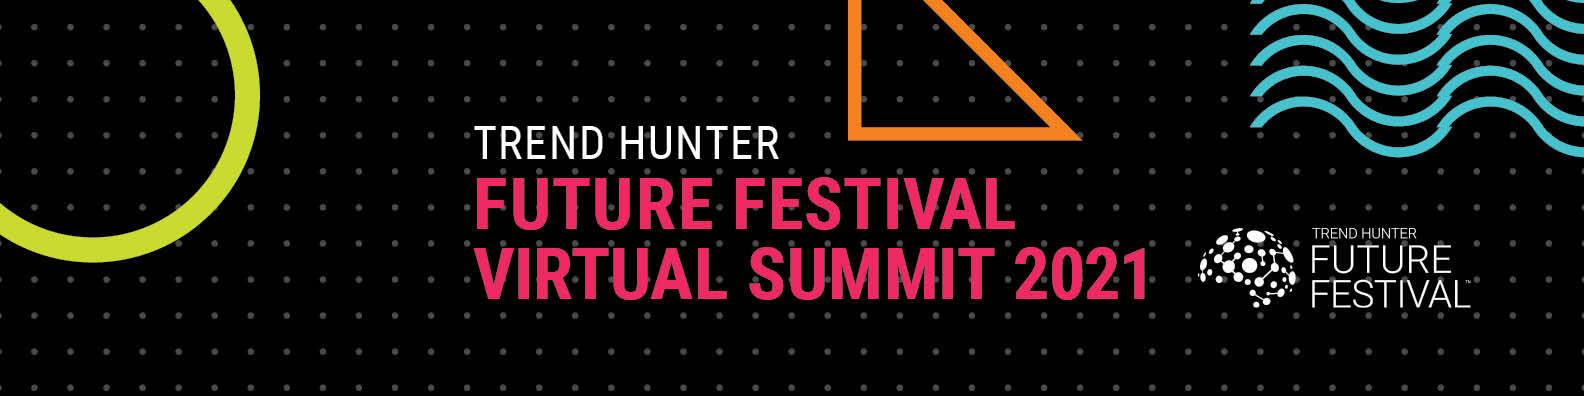 Future Festival Virtual Summit, Online Event